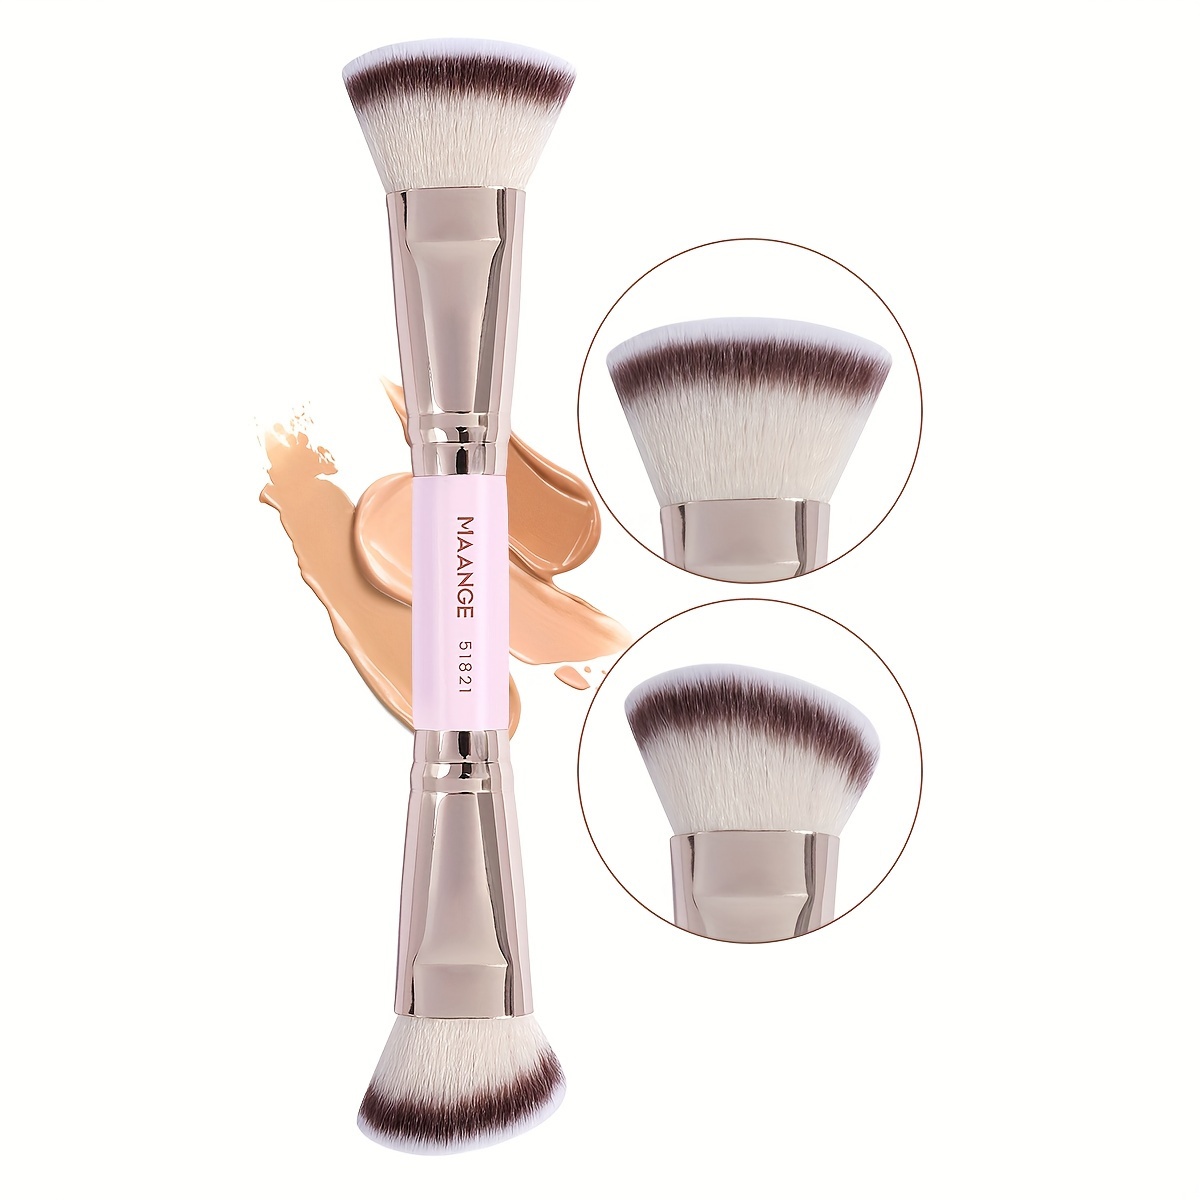 

Maange 1pc Double Head Makeup Brush Foundation Makeup Brush Contour Brush Powder Blusher Brush High-end Makeup Tool Portable For Travel Women Gift